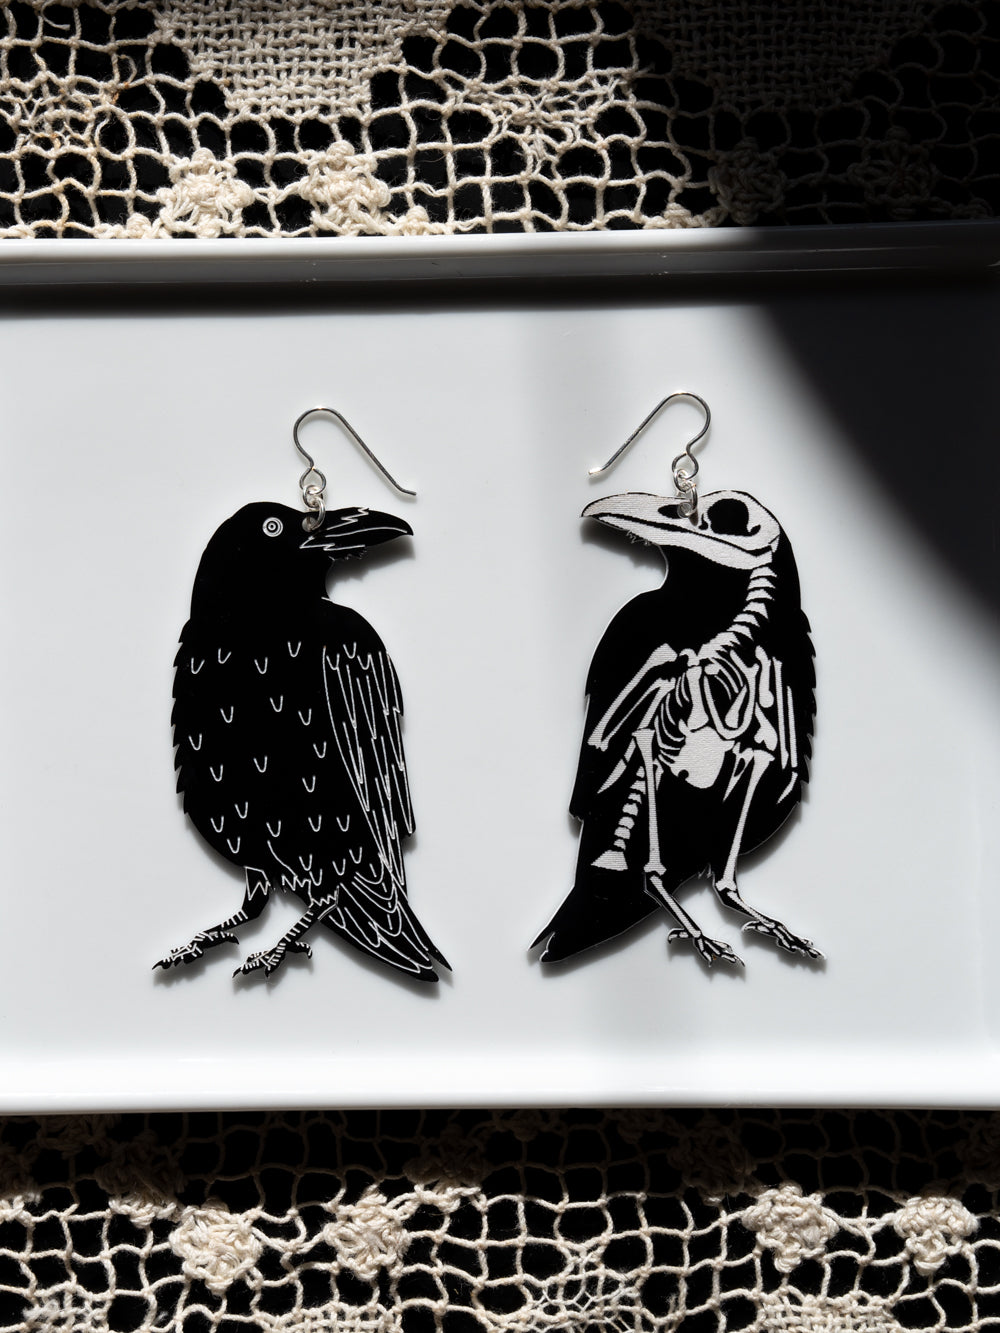 Raven Earrings on white tray